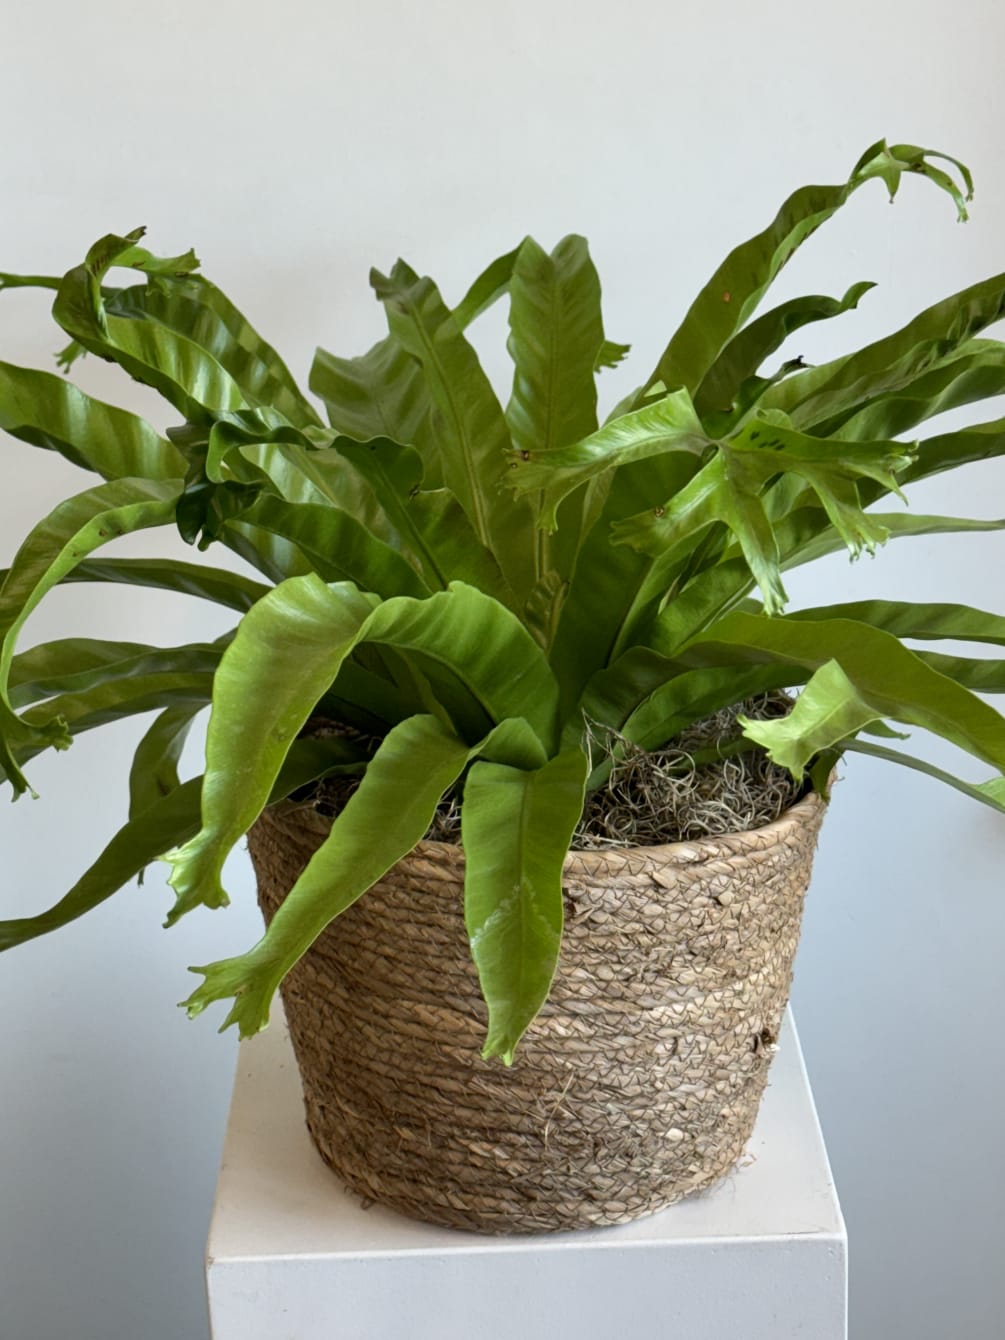 This fun plant is a unique specimen that arrives in a basket.